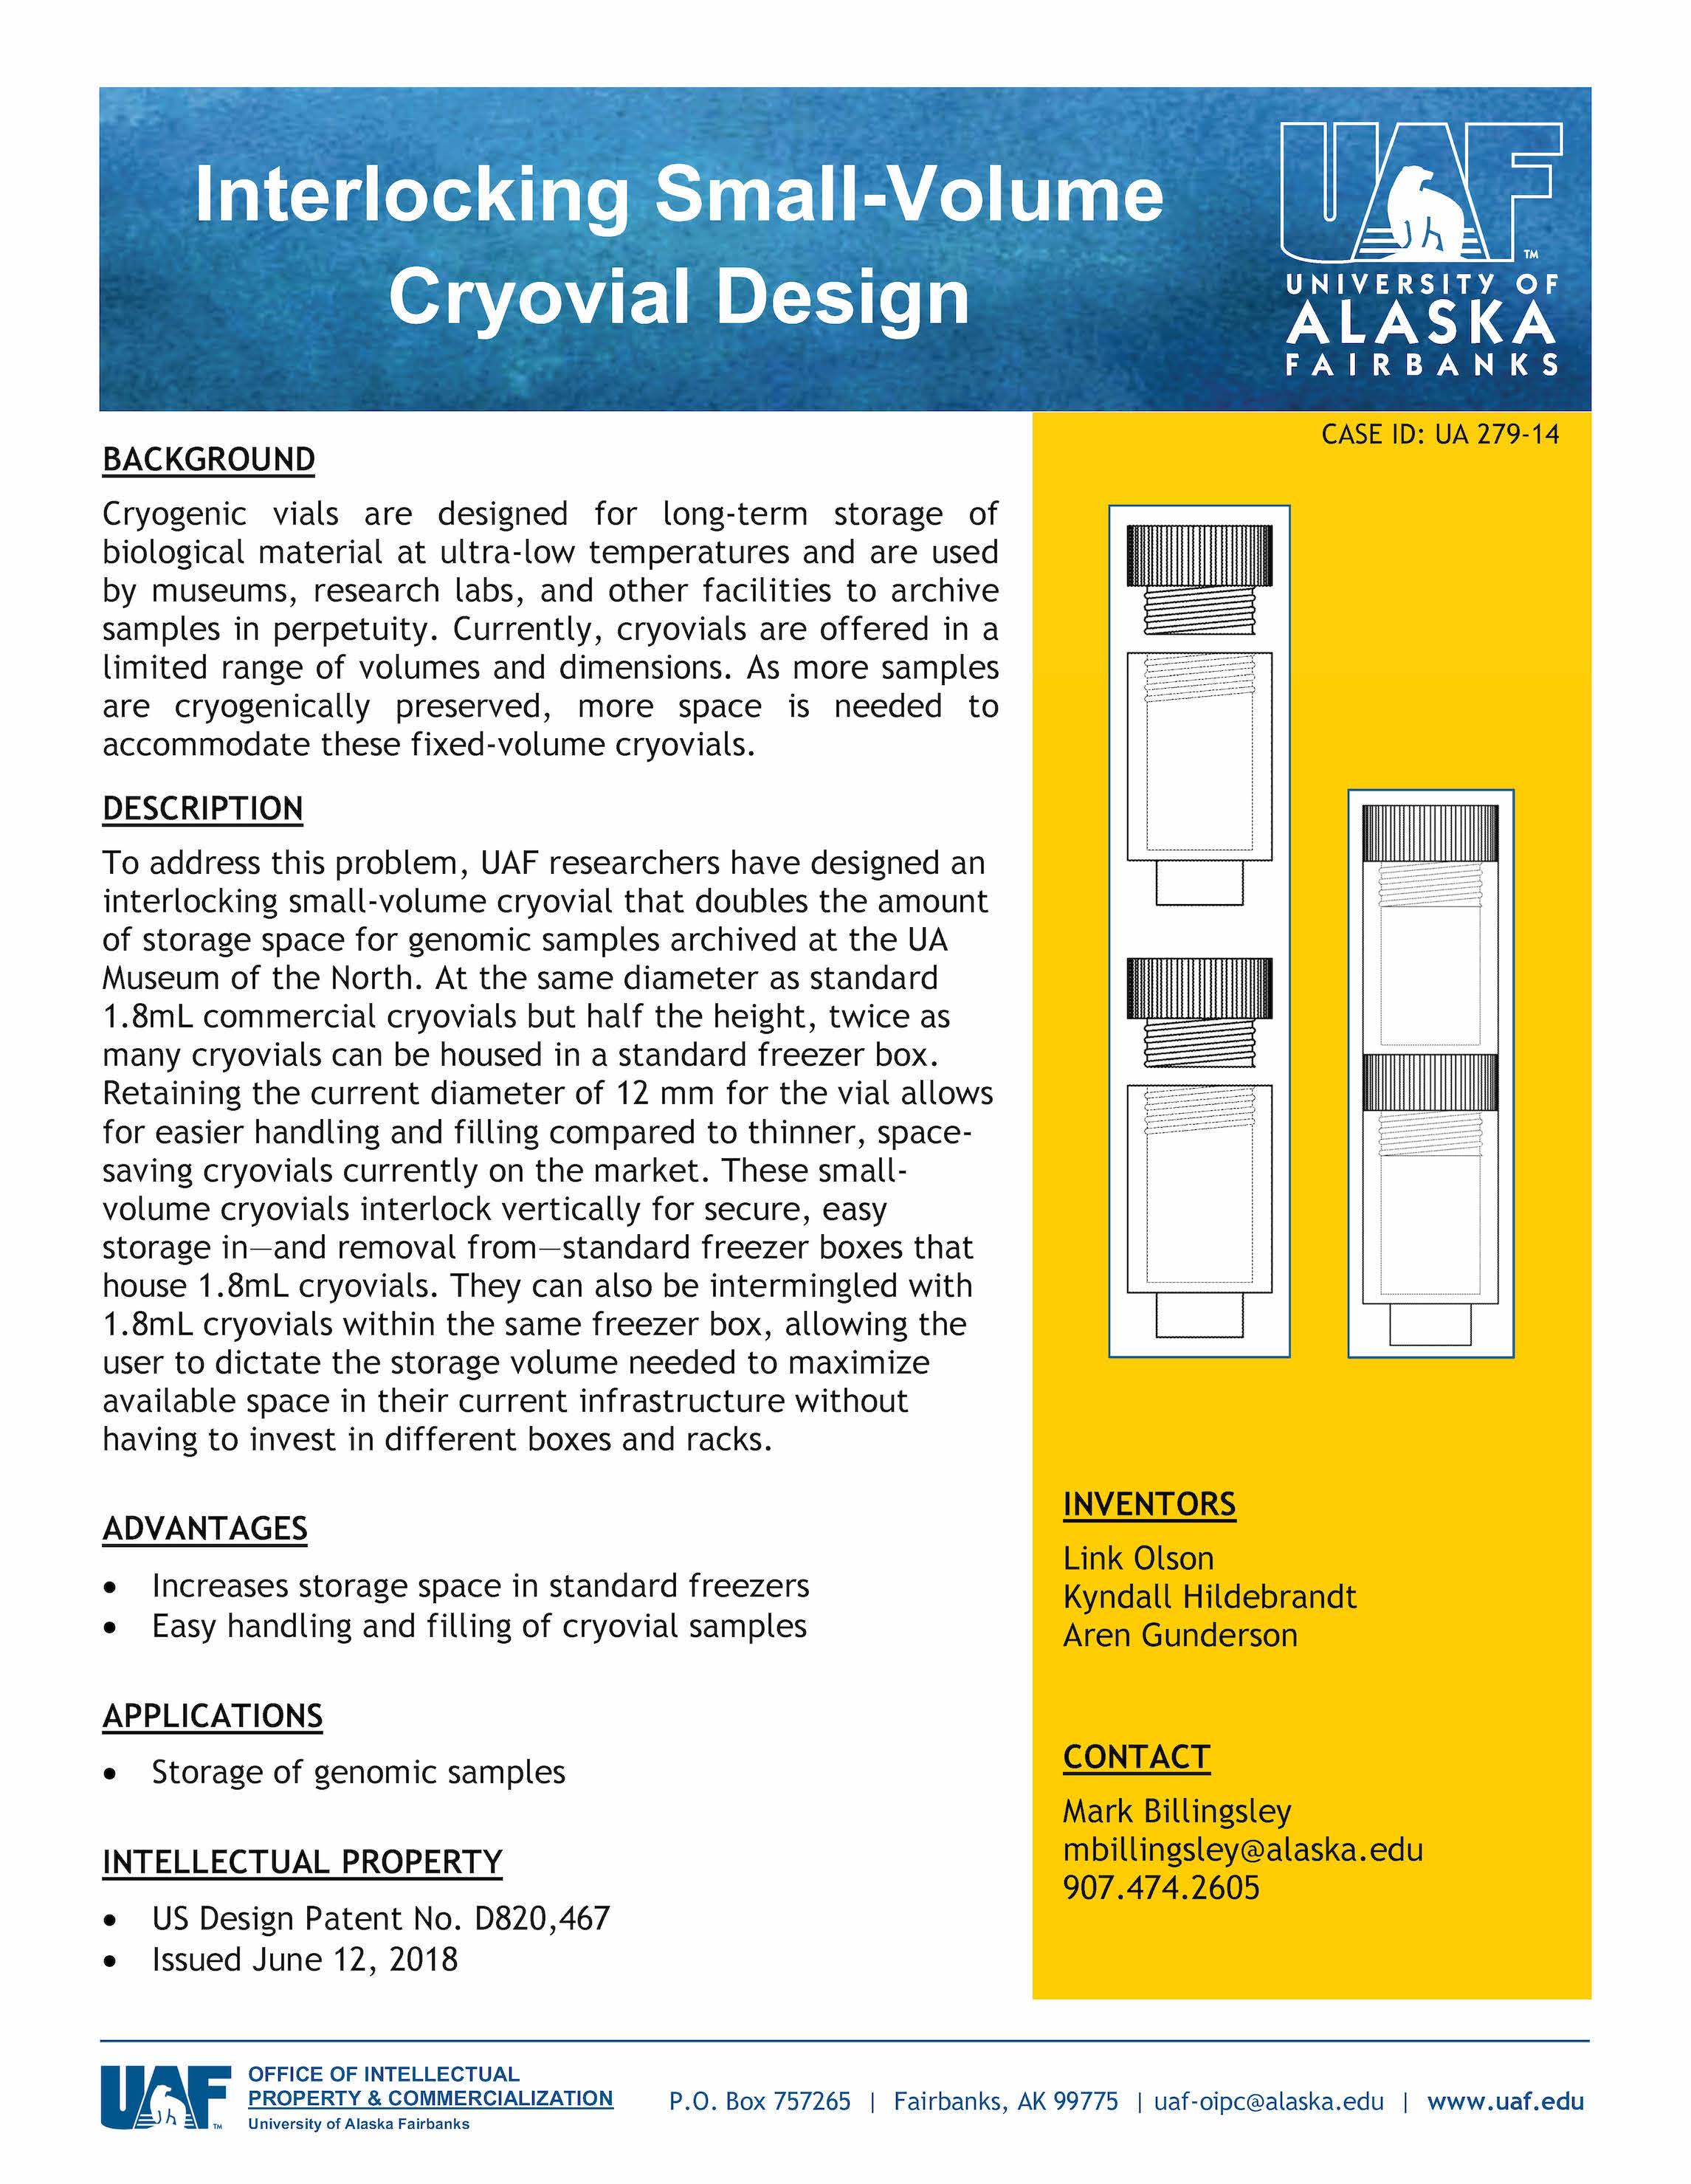 UAF Technology - Interlocking Small-Volume Cryovial Design